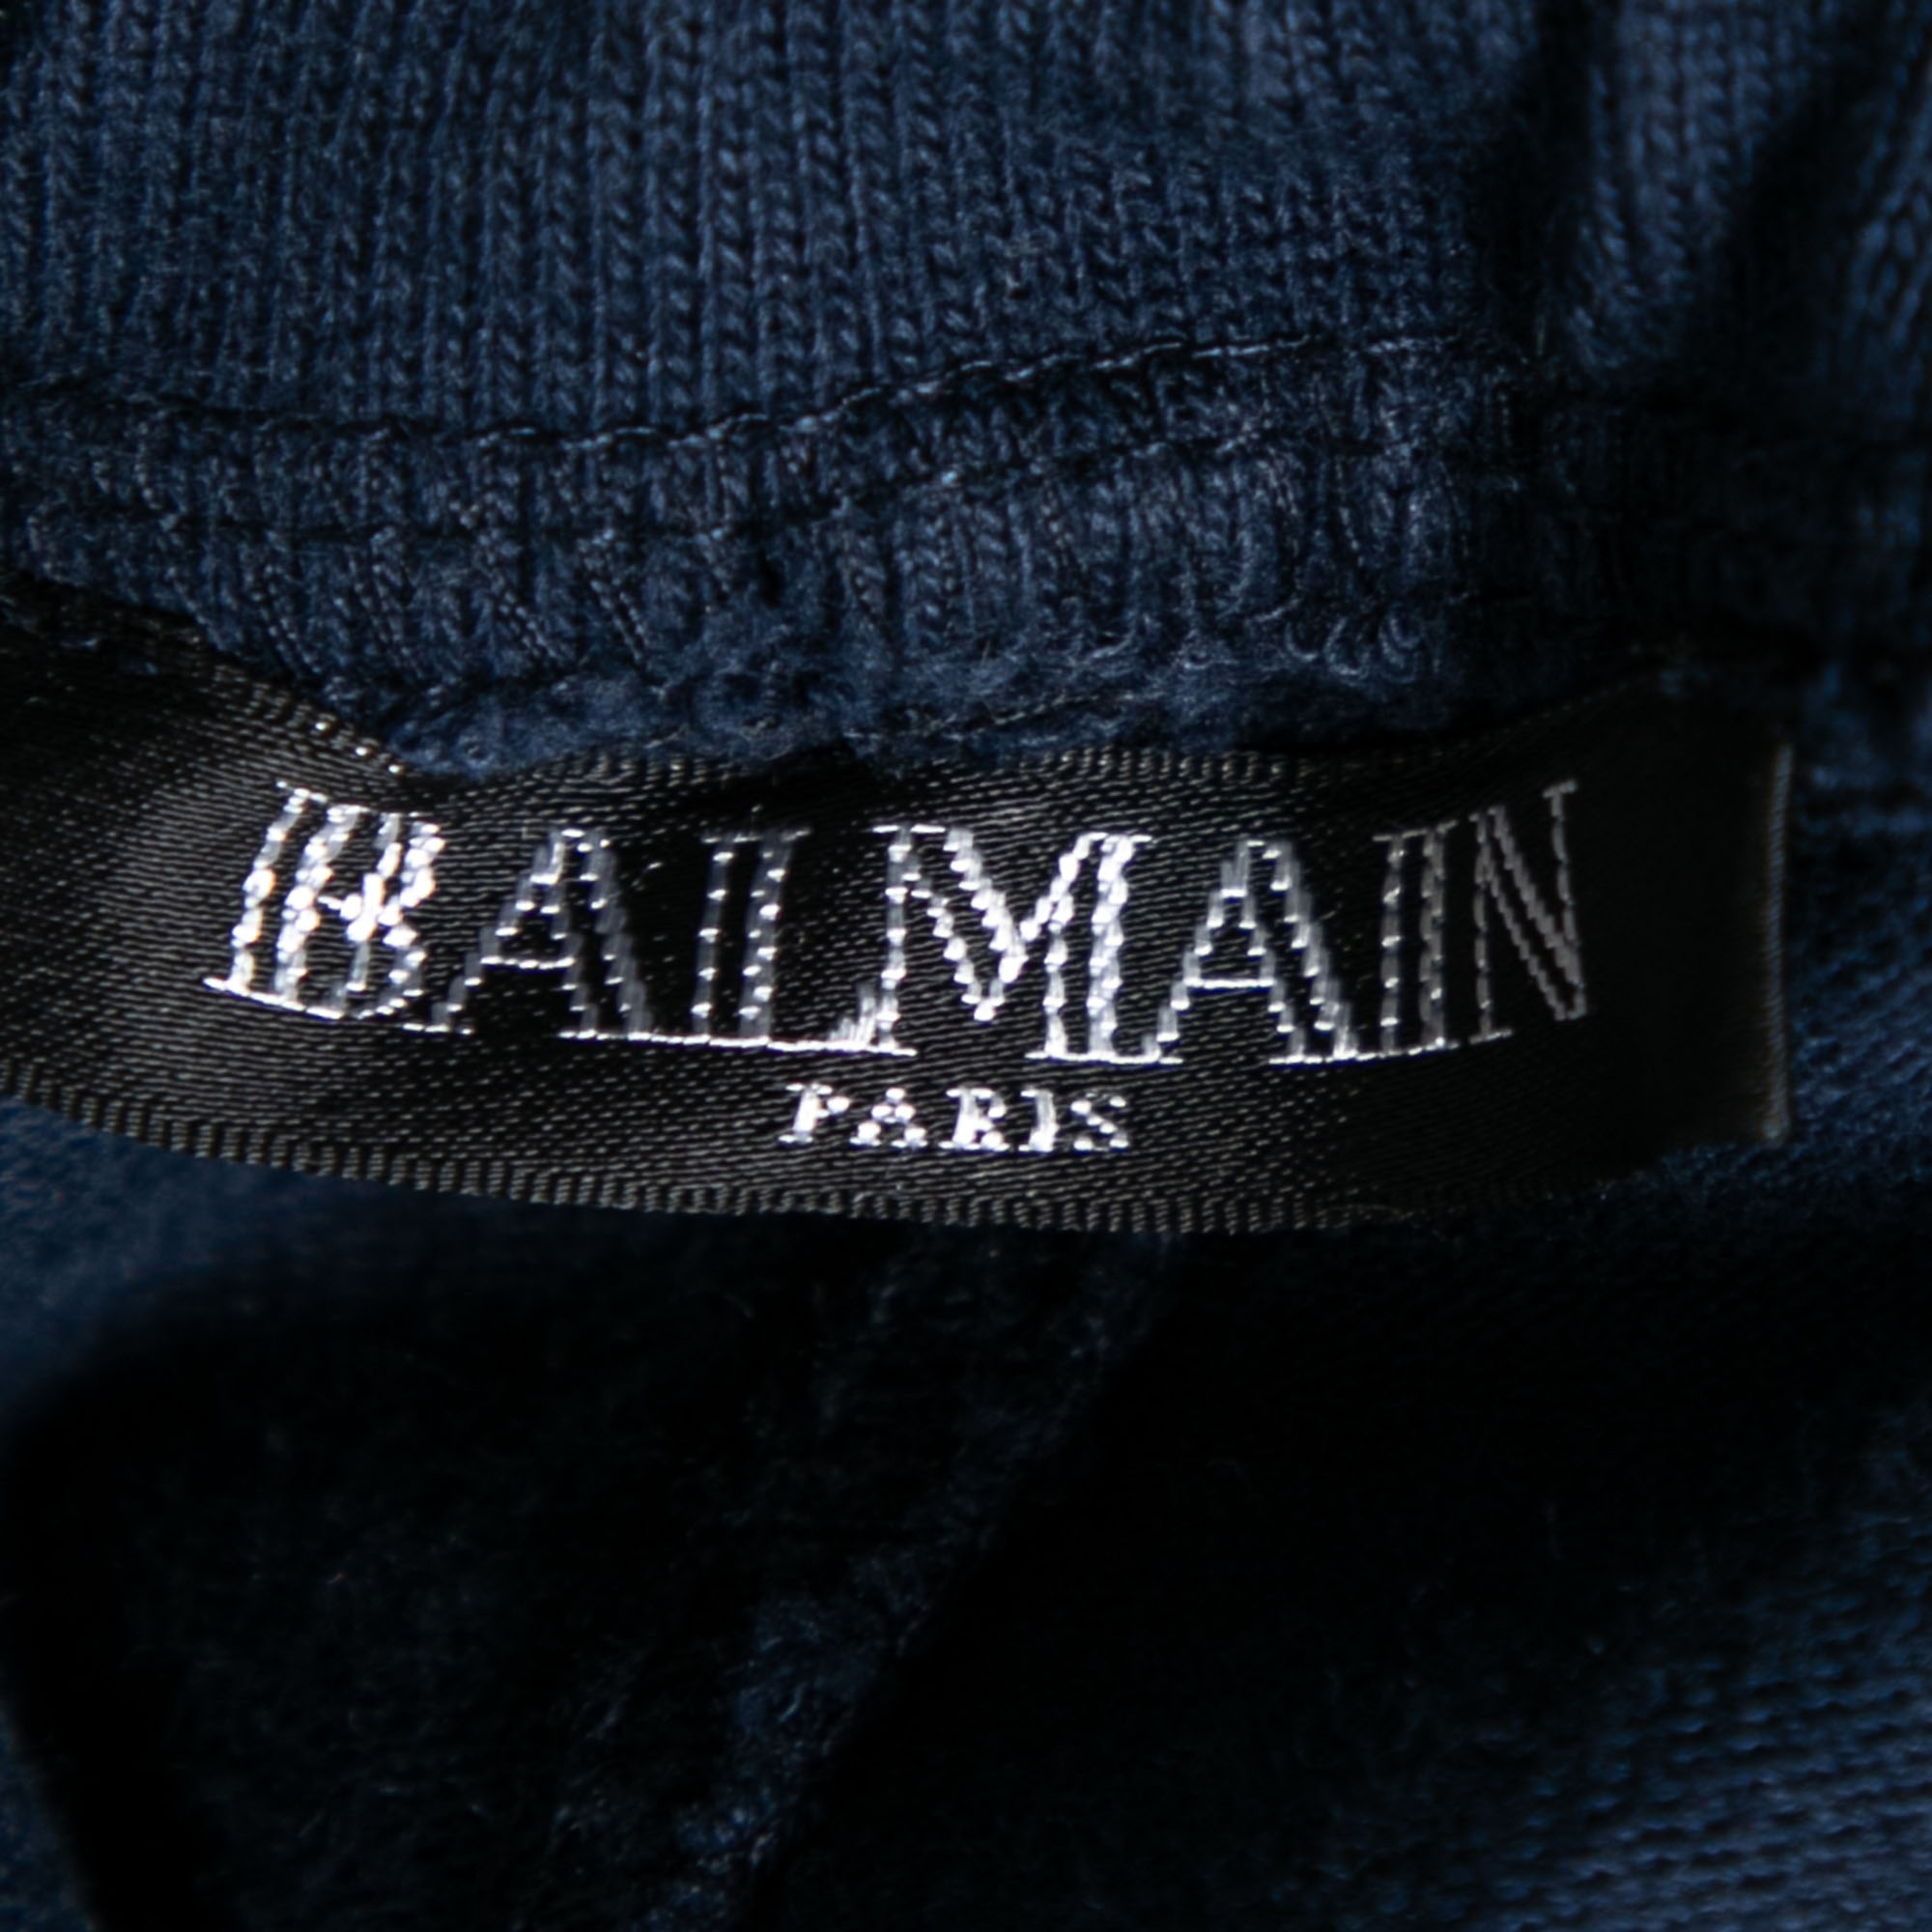 Balmain Navy Blue Cotton Jogger Pants S